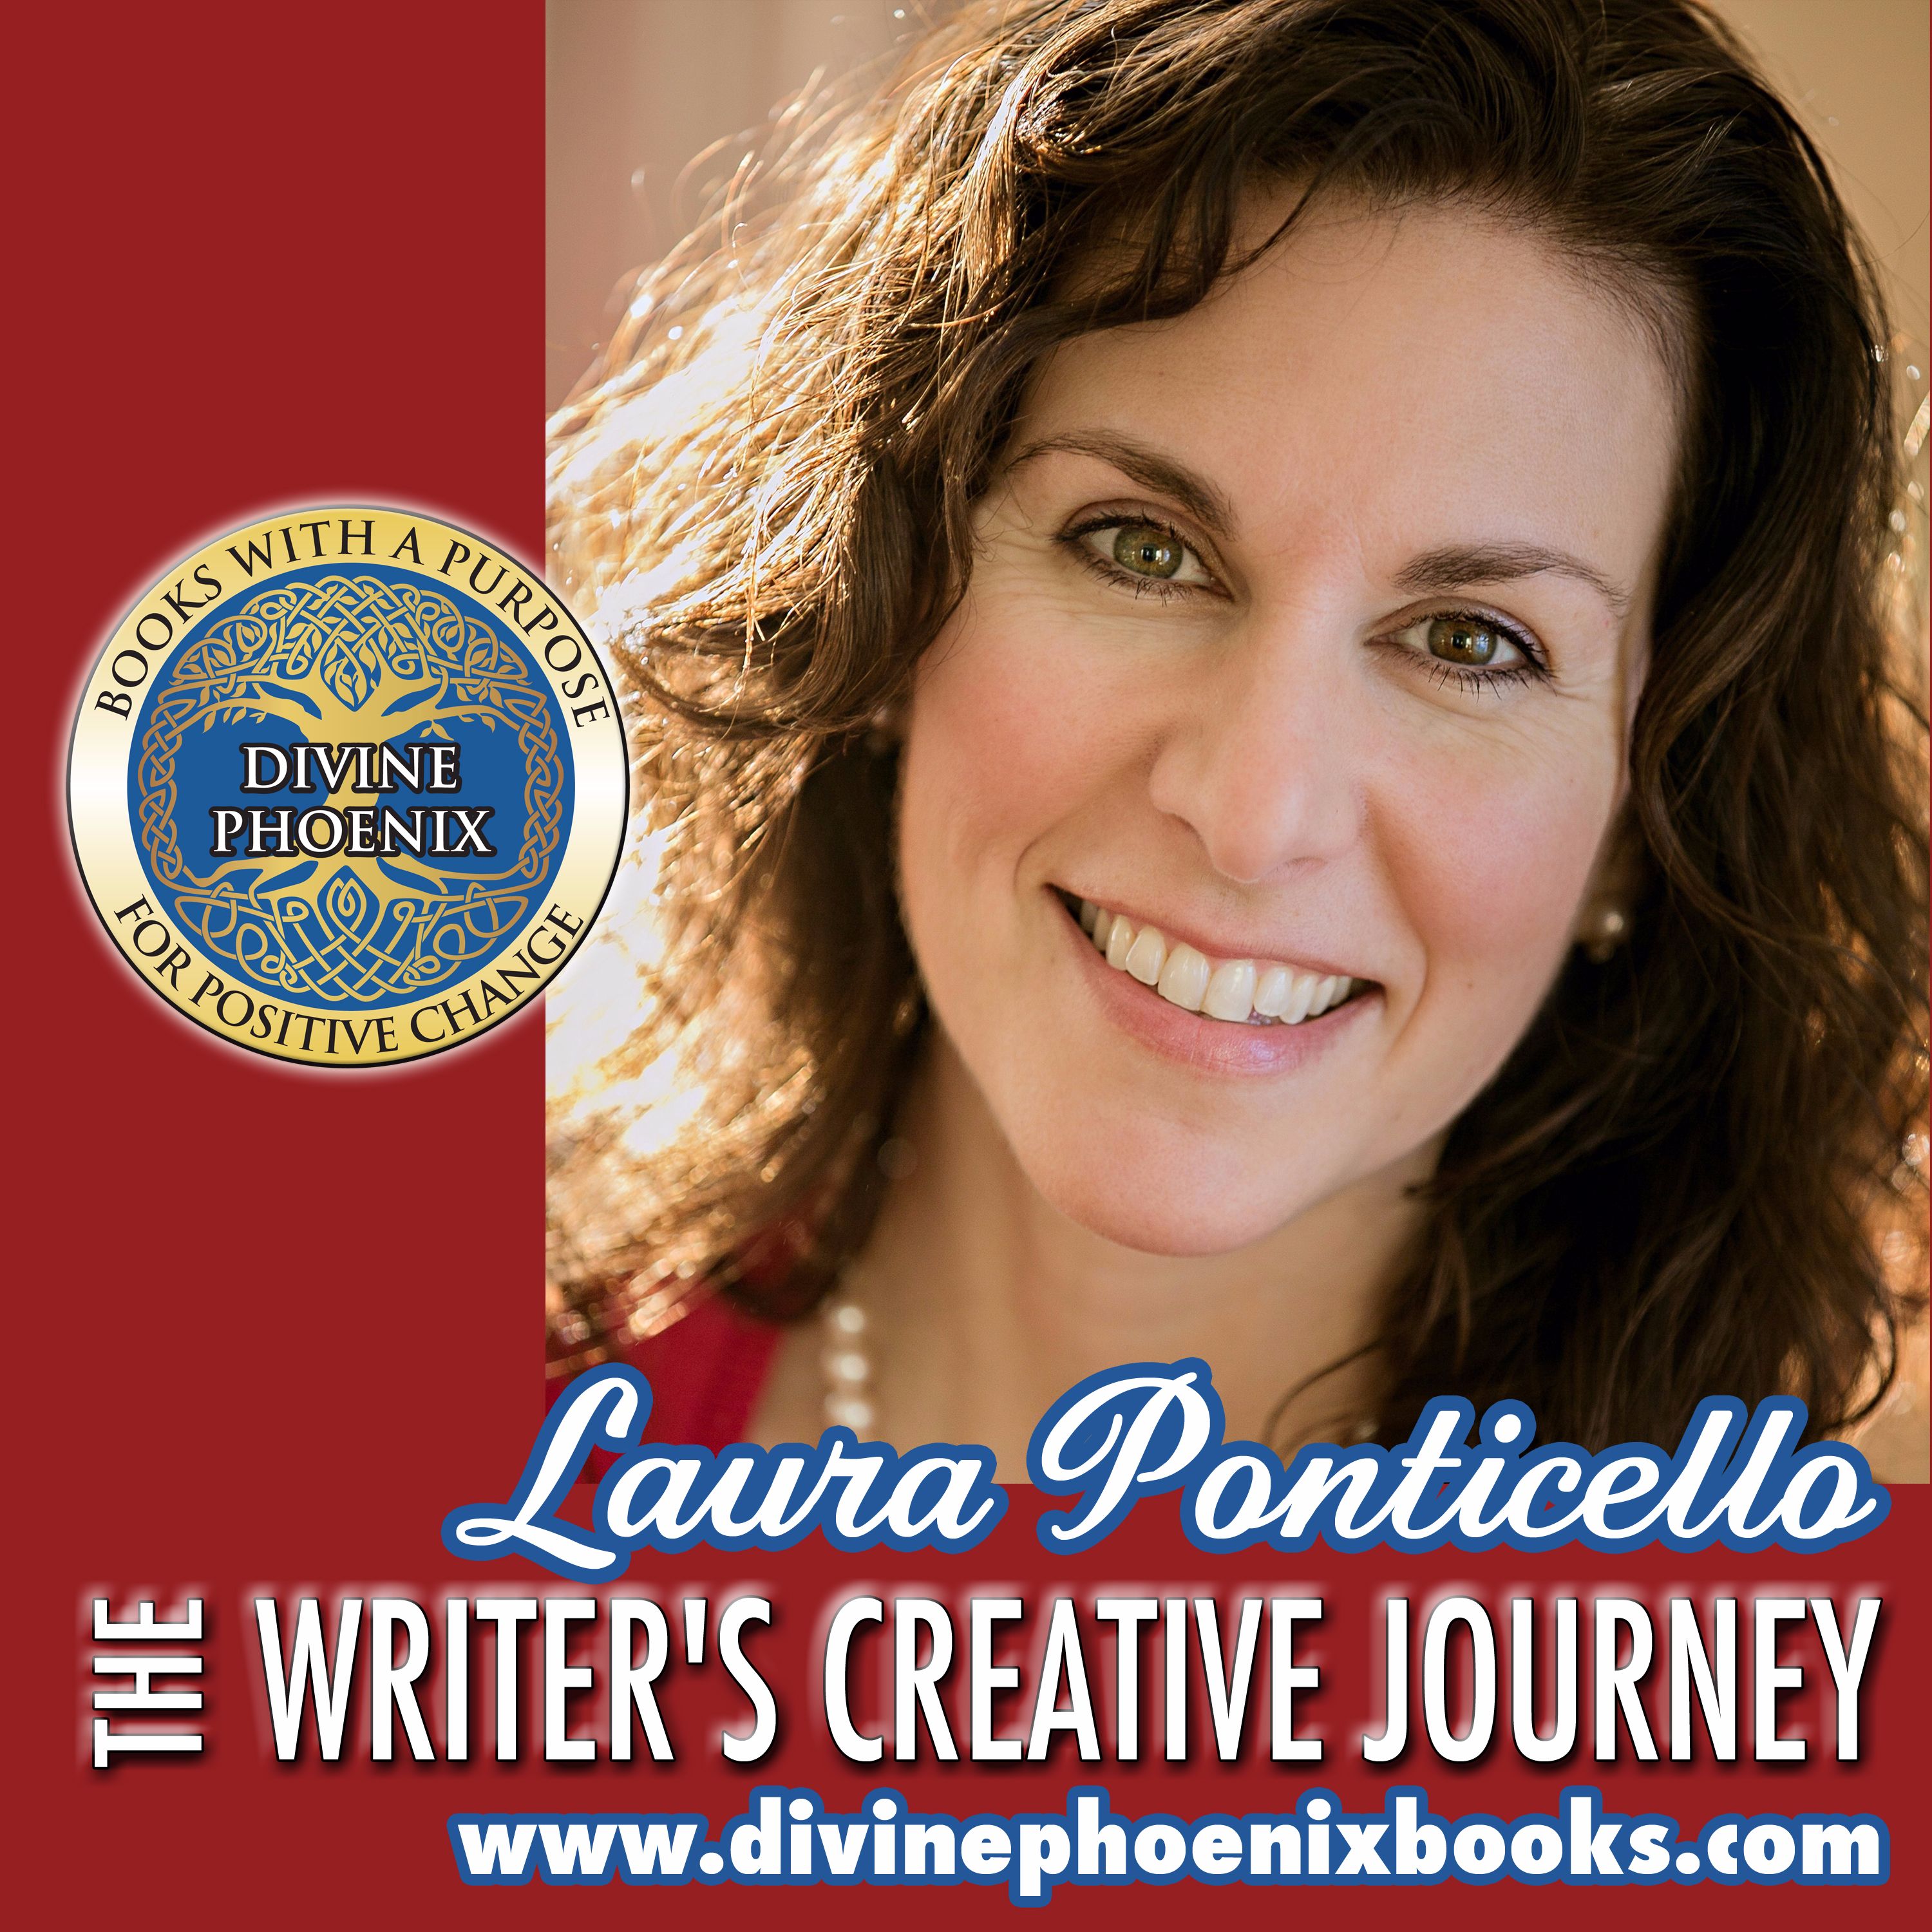 The Writer's Creative Journey